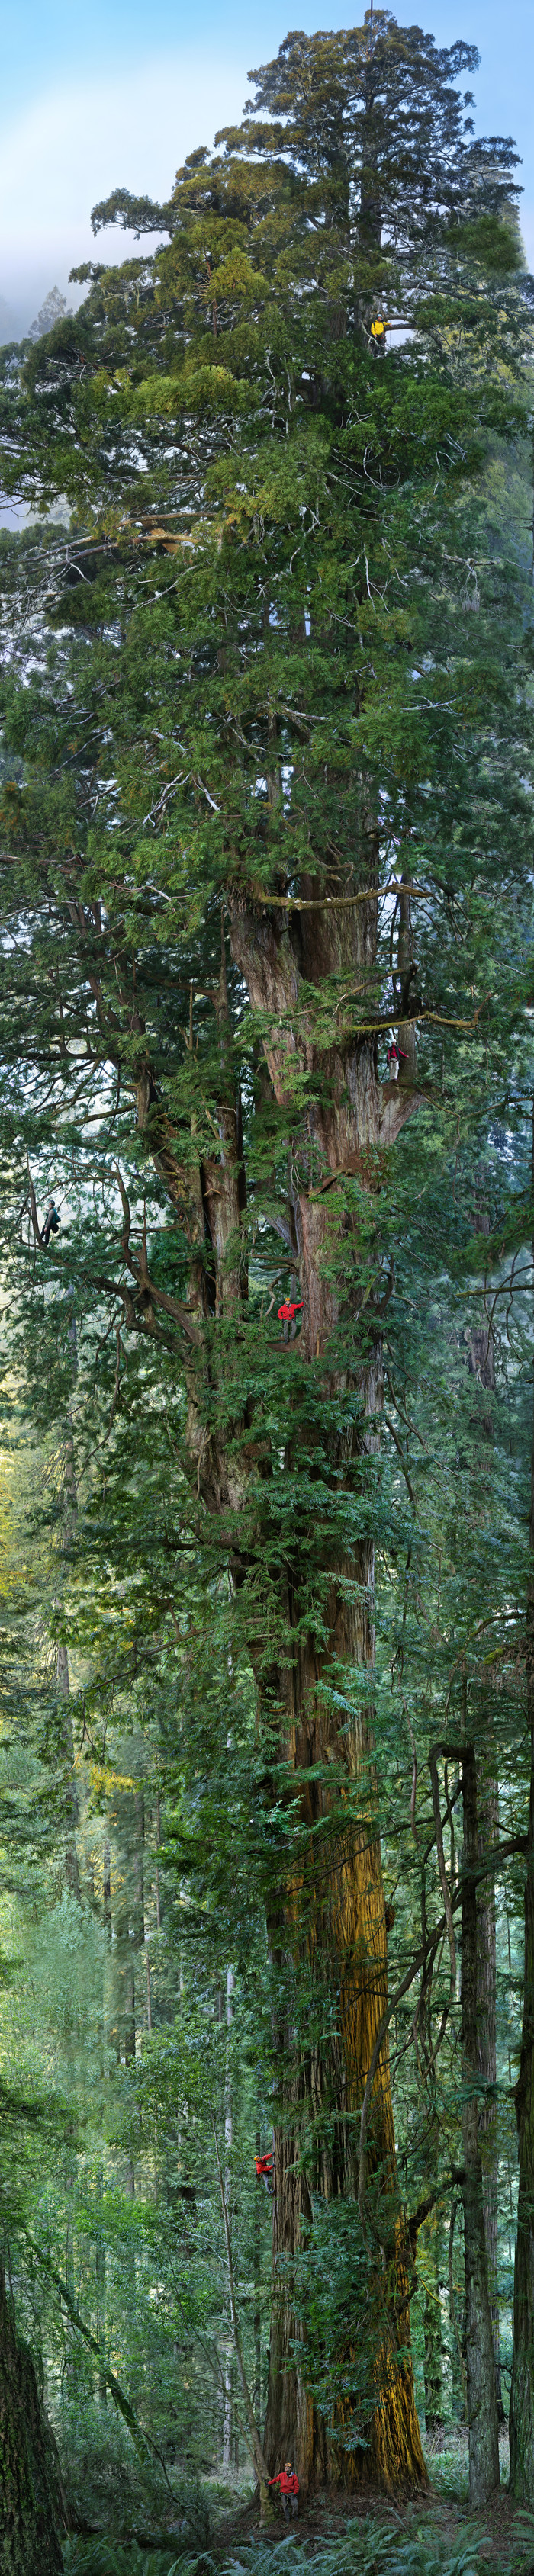 A big tree - Sequoia, Mountaineering, The photo, Tree, Longpost